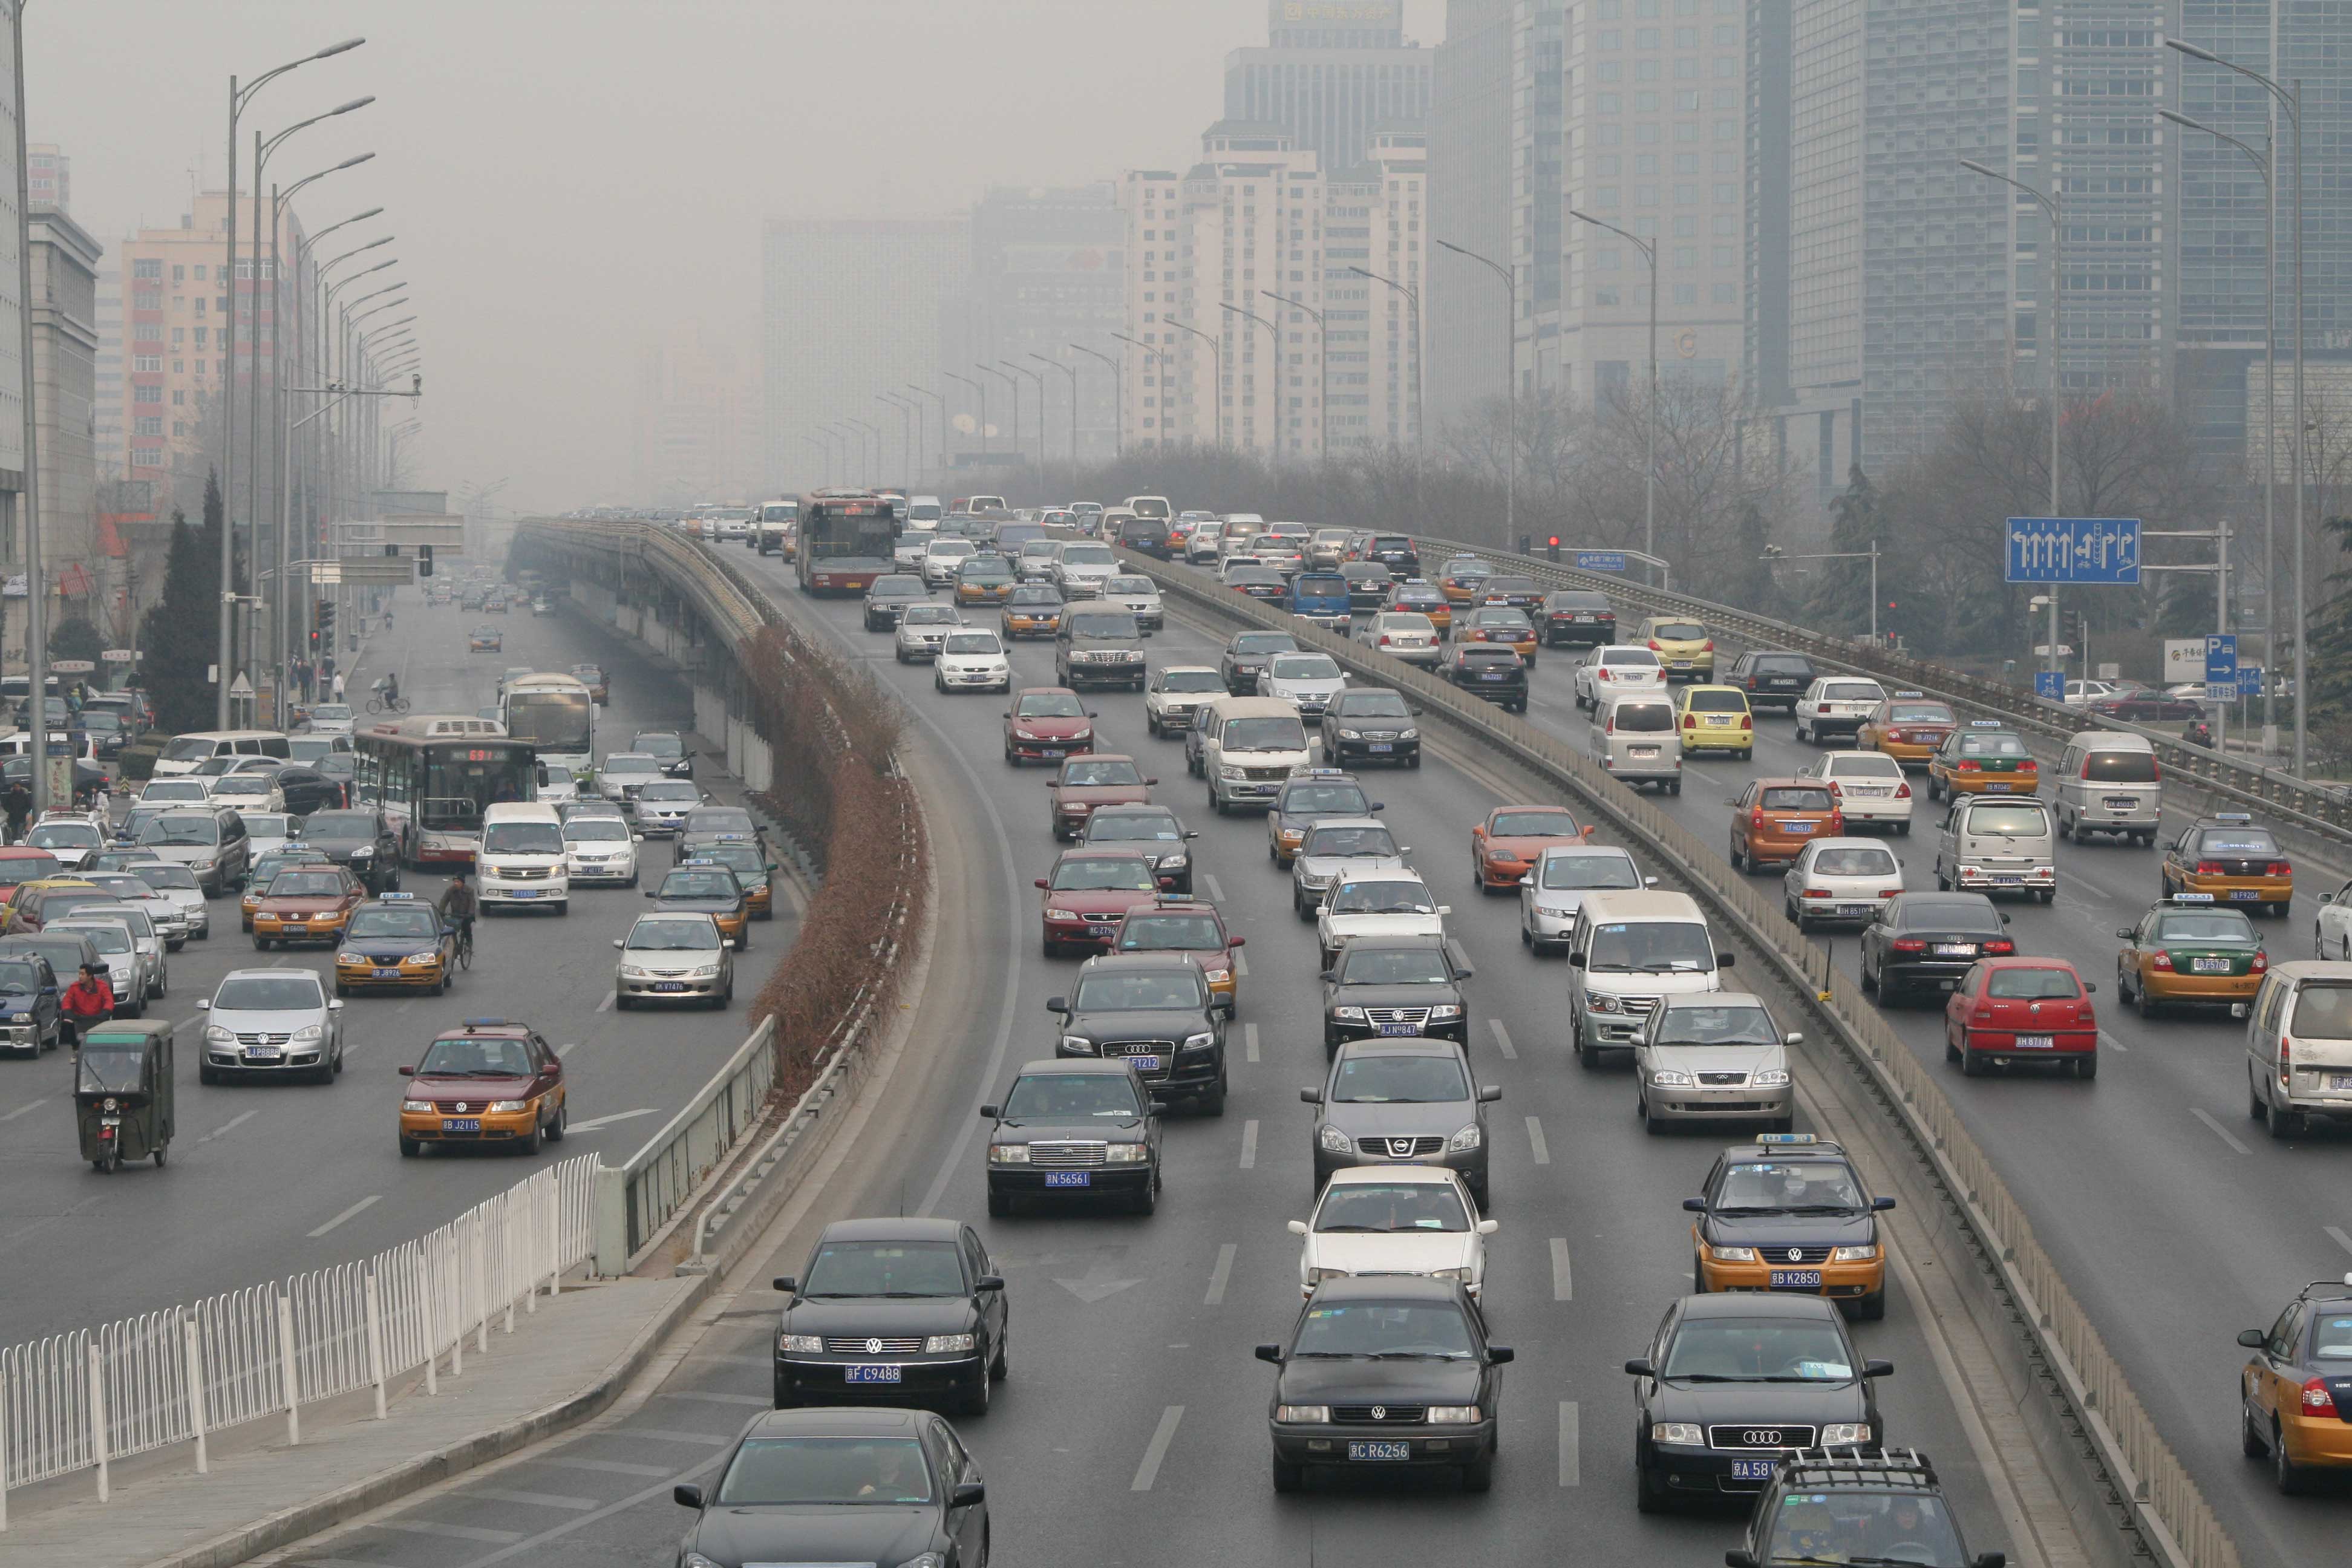 China chokes on high-density sprawl